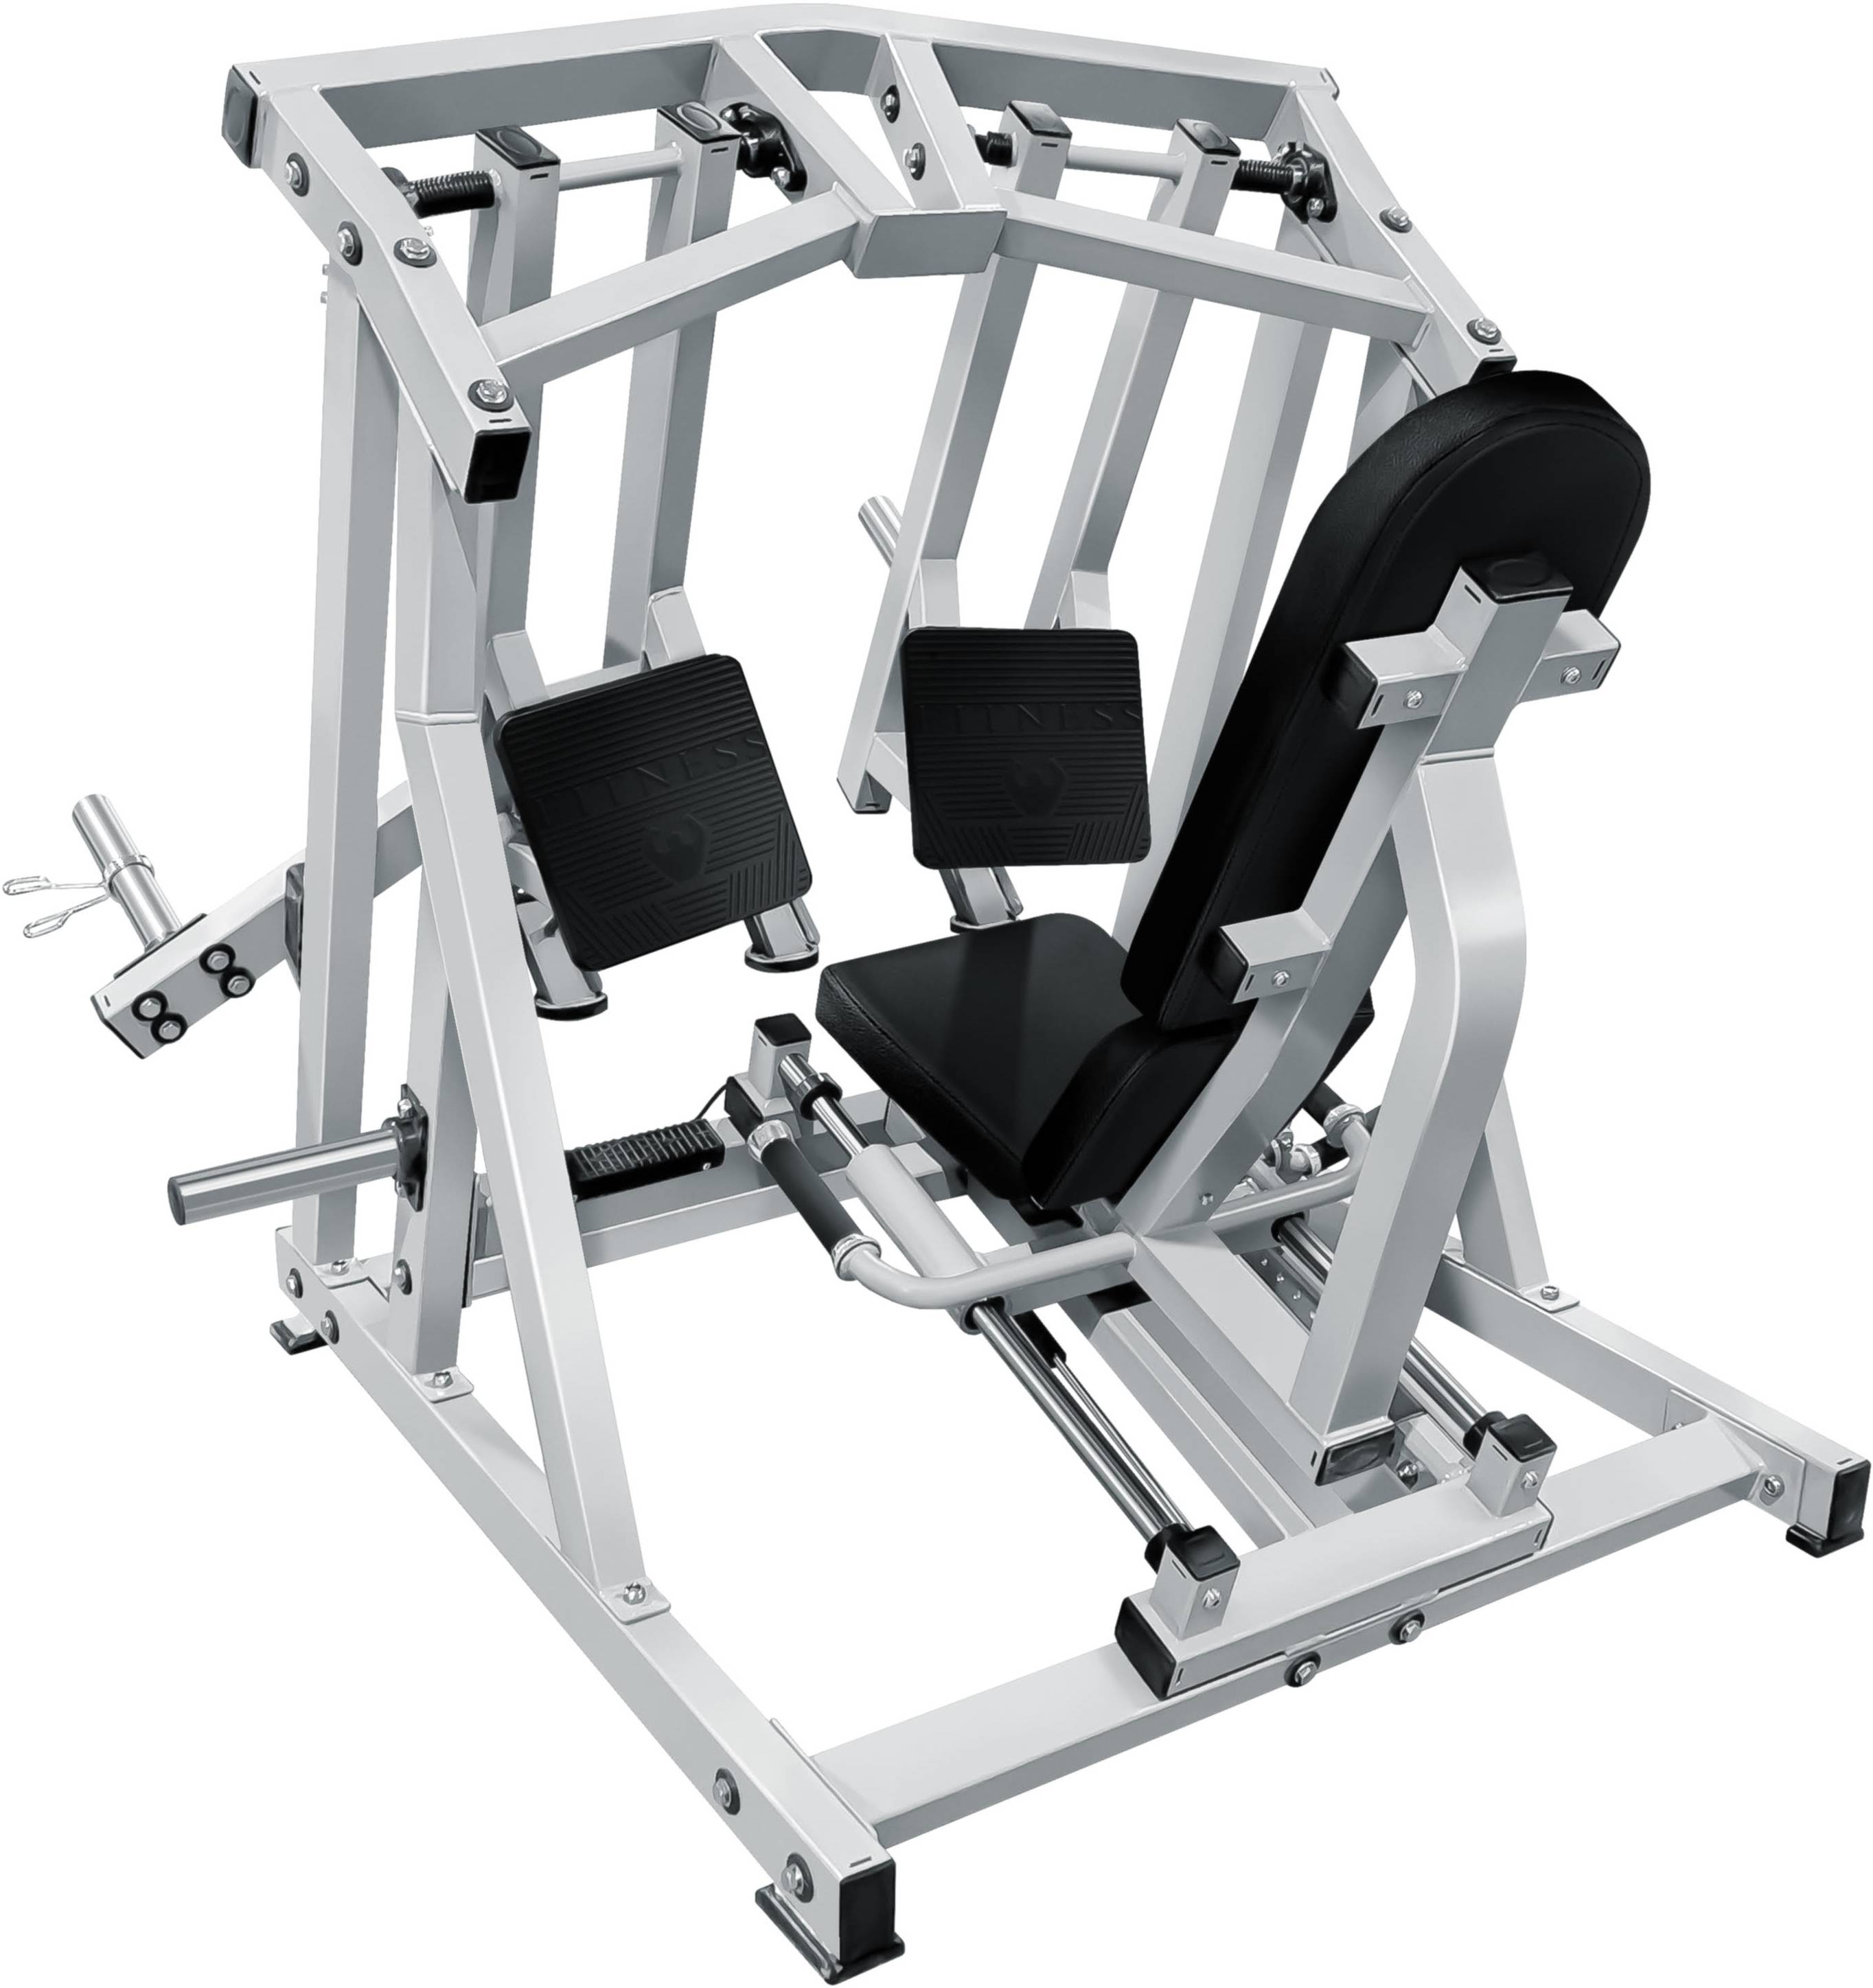 Premium Leg Press Machines for Your Home Gym